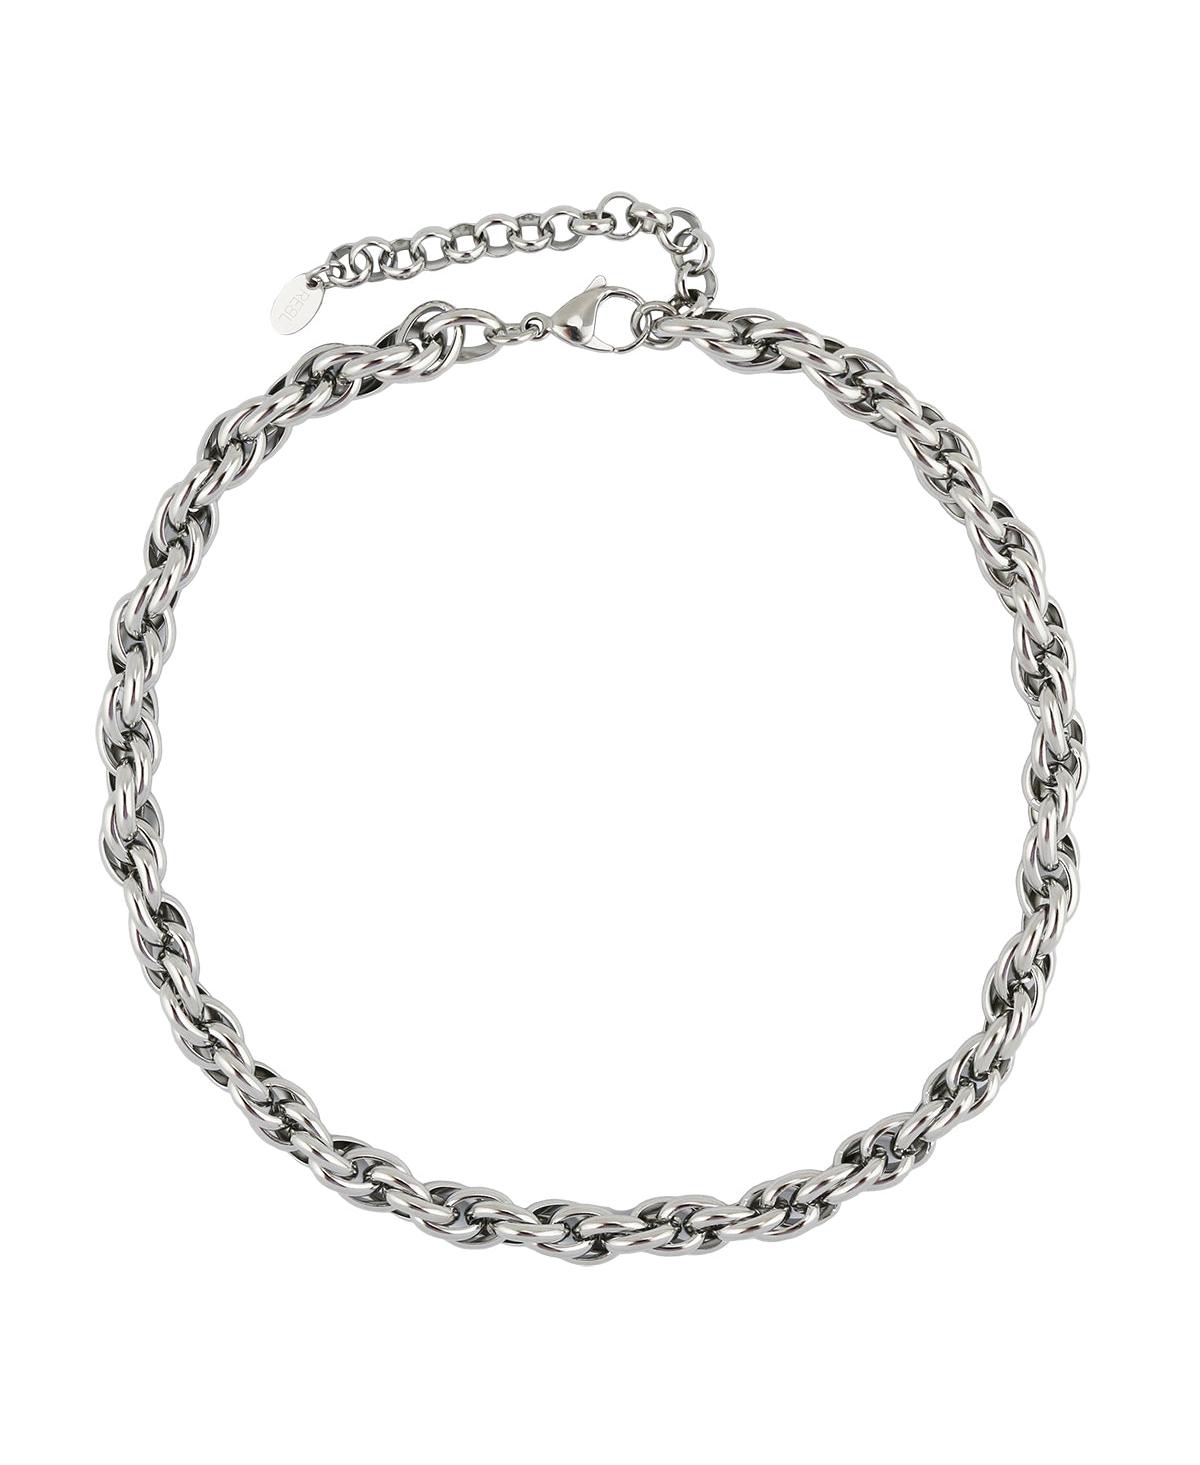 Indigo Chain Necklace - Silver